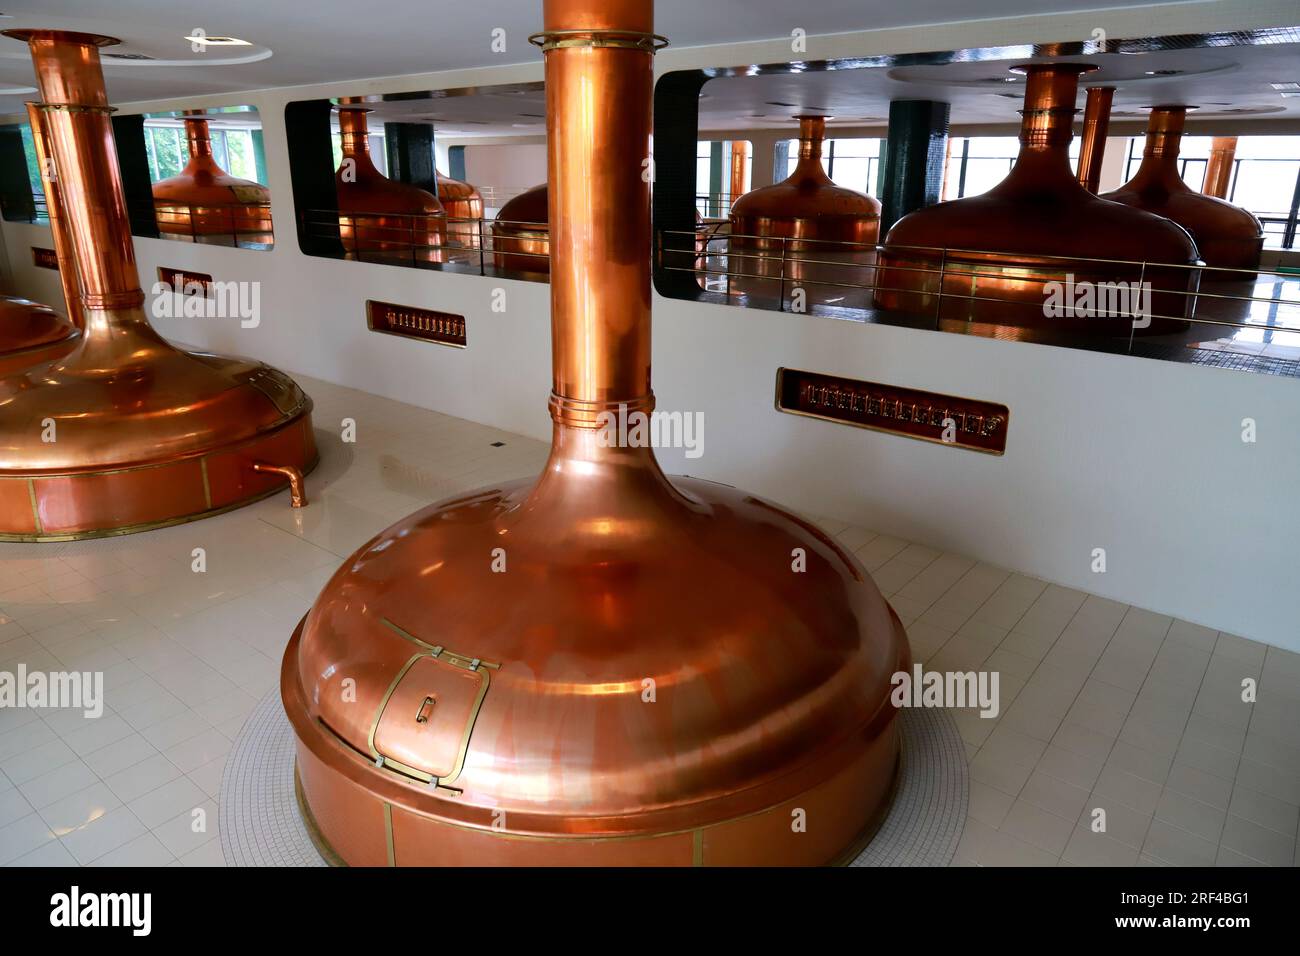 https://c8.alamy.com/comp/2RF4BG1/vintage-copper-kettle-in-brewery-traditional-copper-distillery-tanks-in-beer-brewery-brew-kettle-for-beer-pilsen-czech-republic-2RF4BG1.jpg